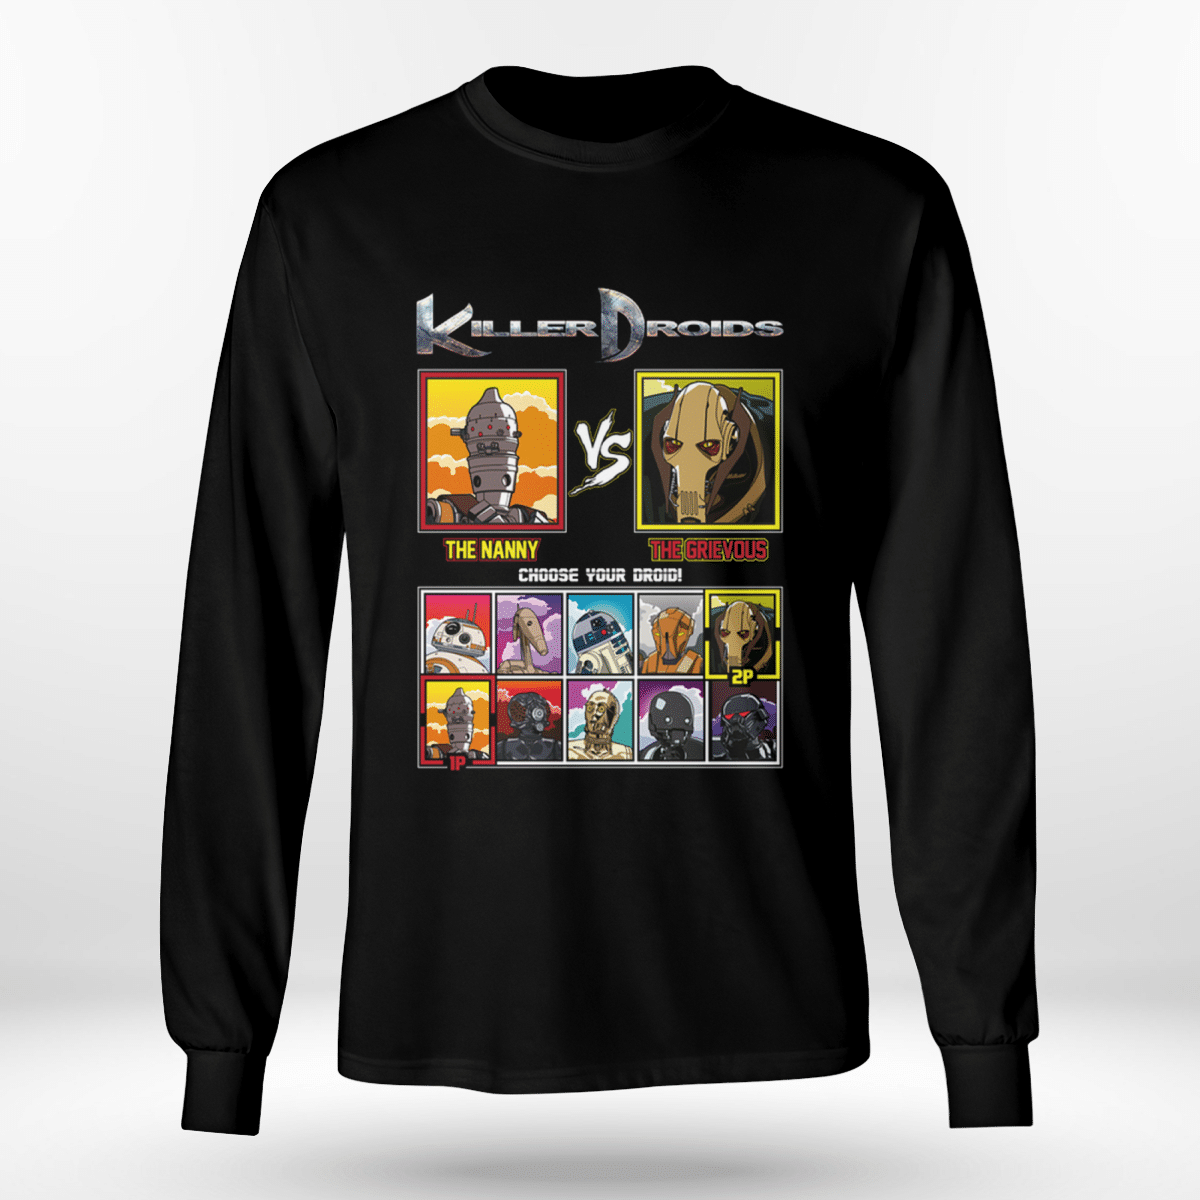 Killer Droids T-Shirt